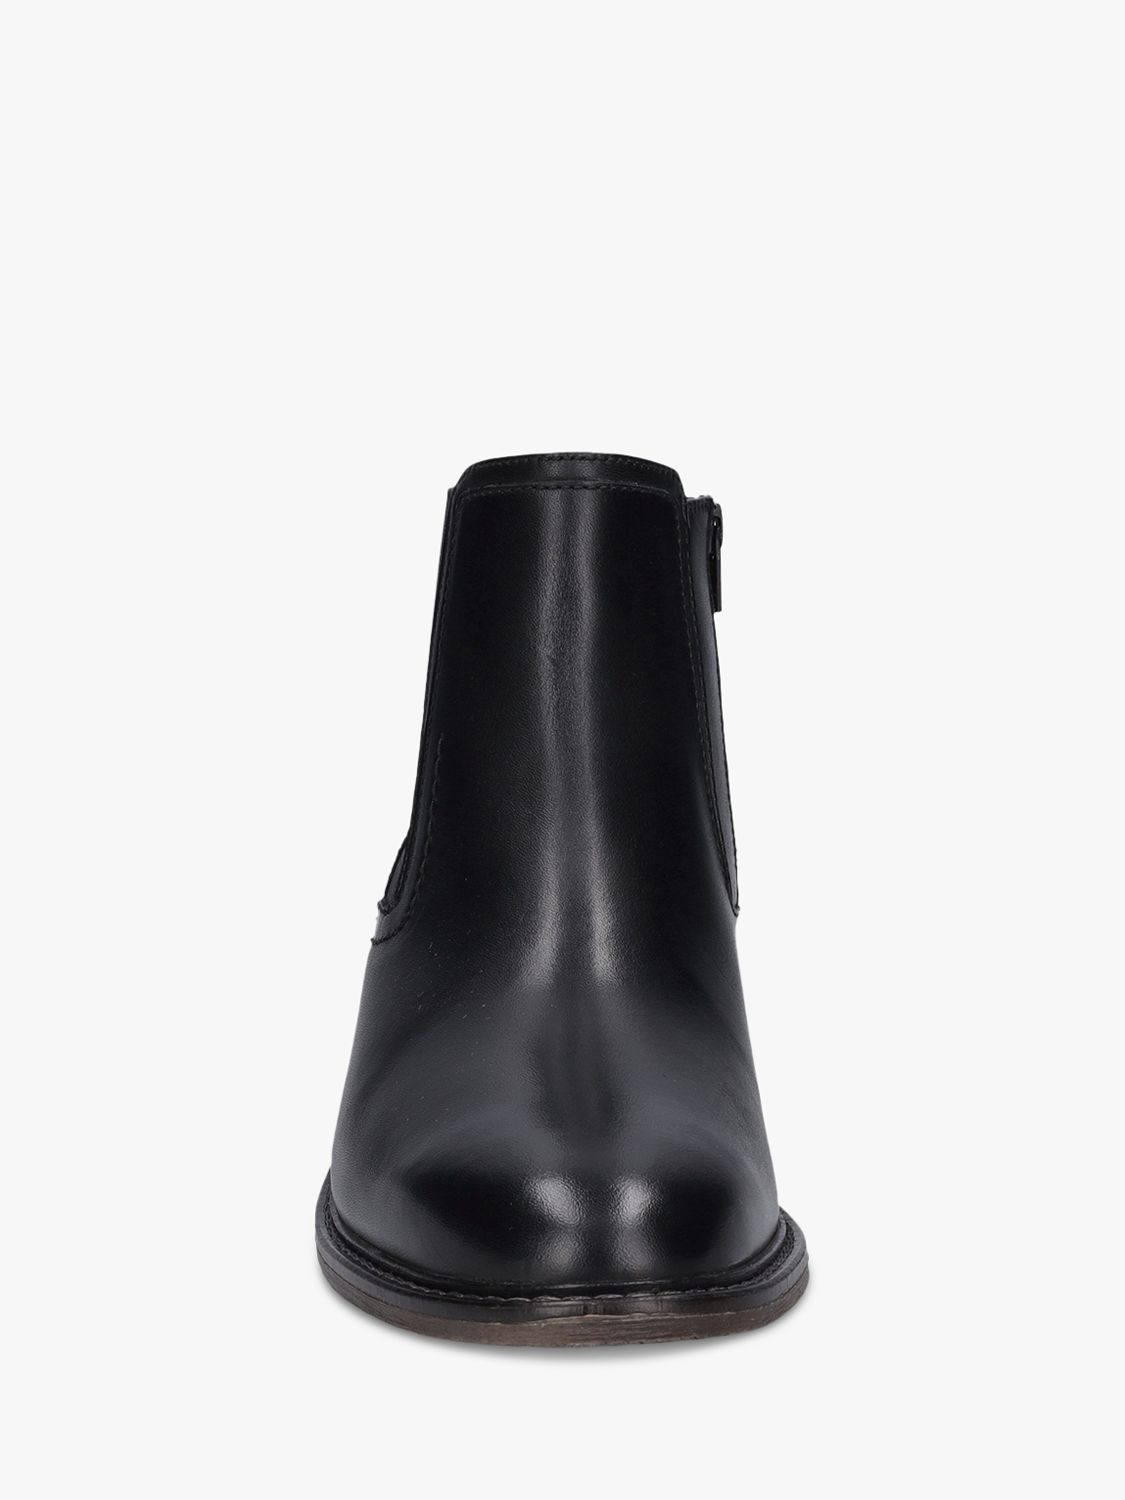 Josef Seibel Earl 08 Leather Chelsea Boots, Black, 8